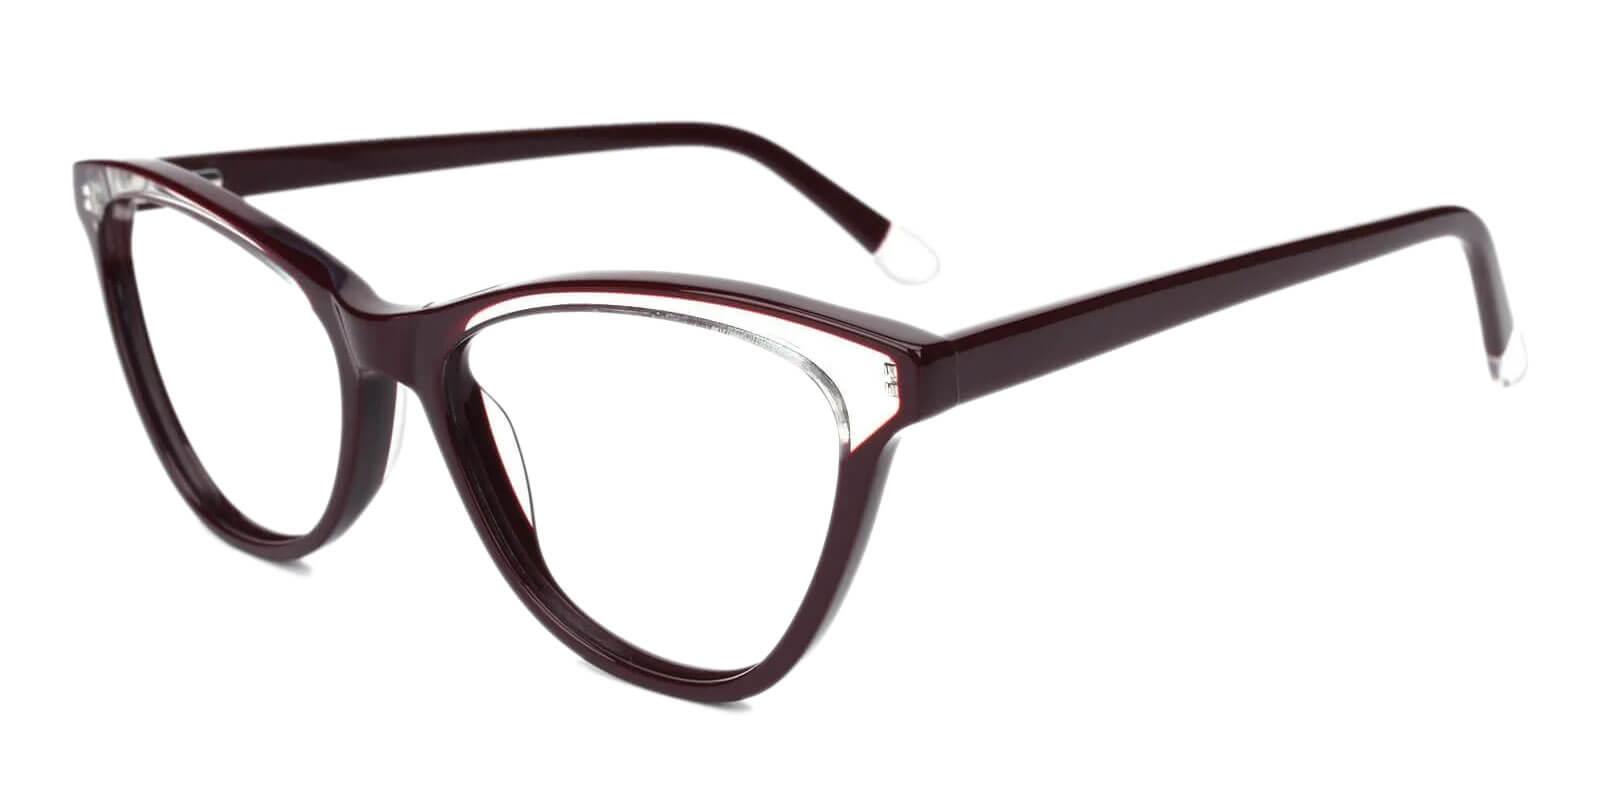 Luznic Brown Acetate Eyeglasses , UniversalBridgeFit Frames from ABBE Glasses